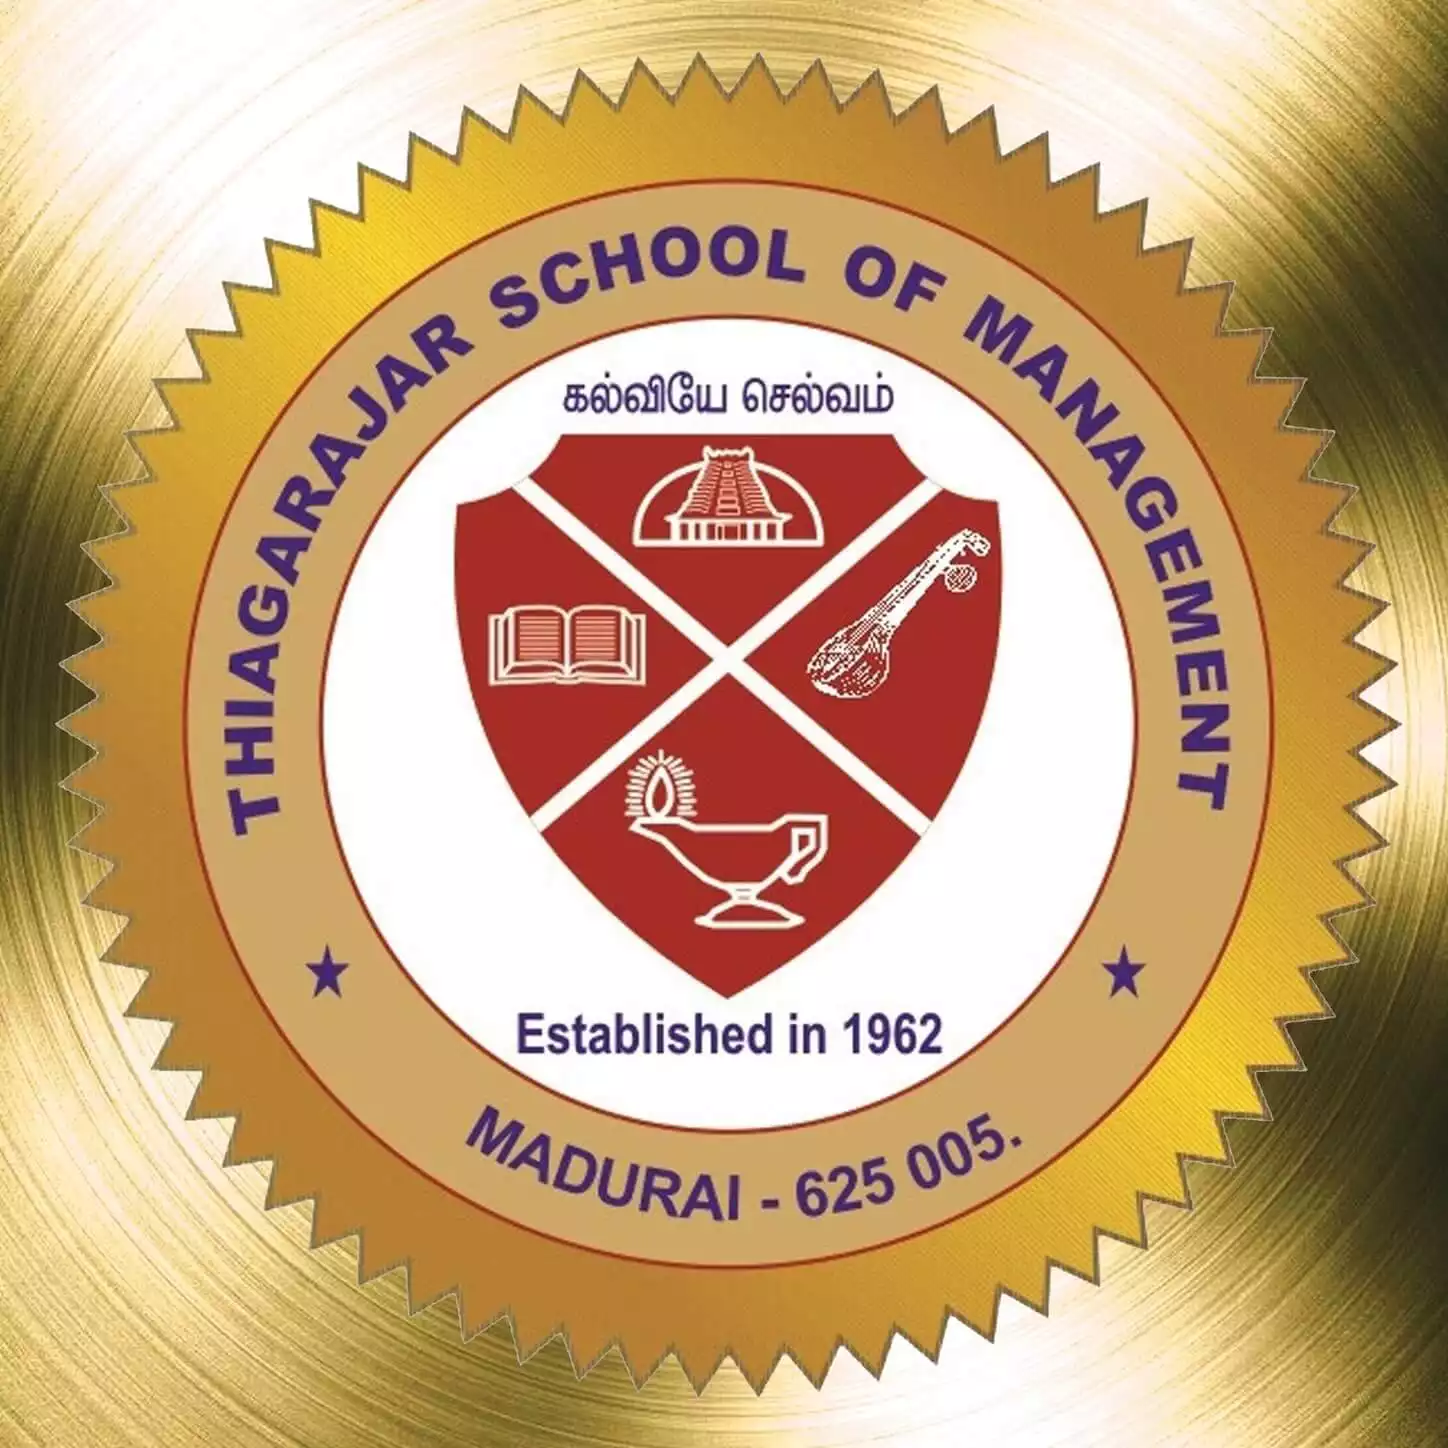 Thiagarajar School of Management, Madurai